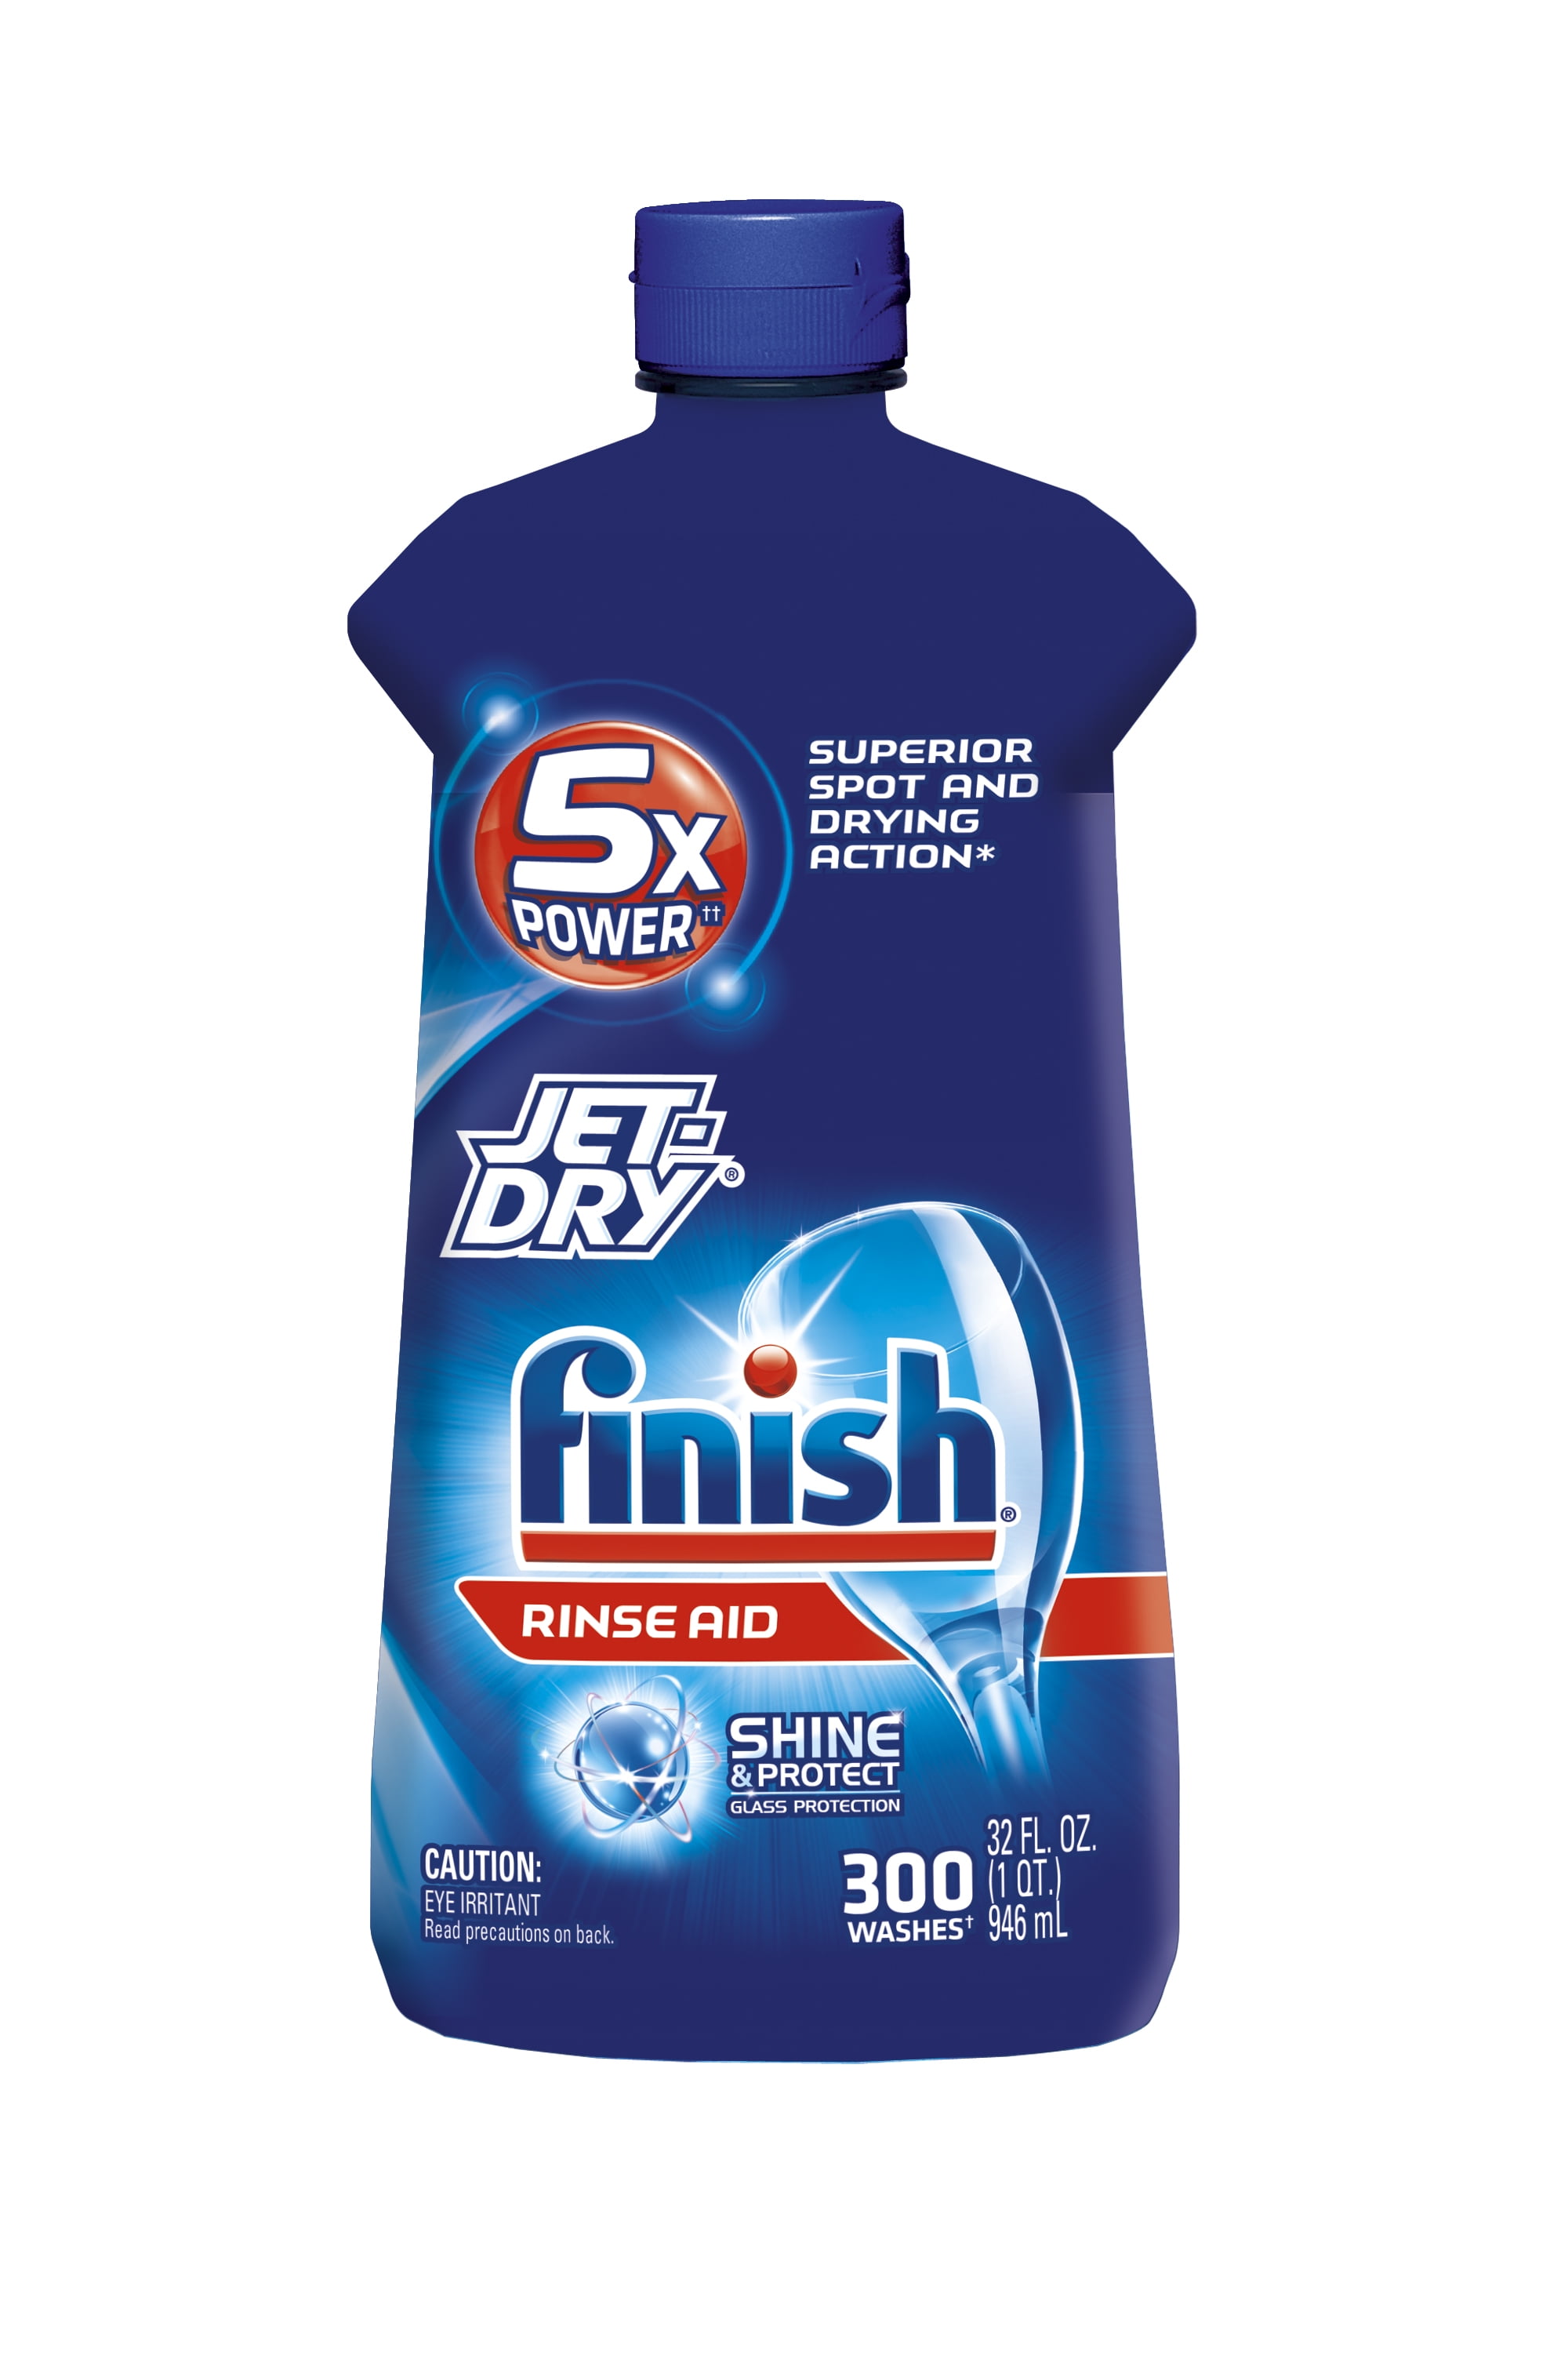 Shop Finish Ultimate Dishwasher Cleaning - Dishwasher Detergent, Jet Dry  Rinsing Agent, & Dishwasher Cleaner at